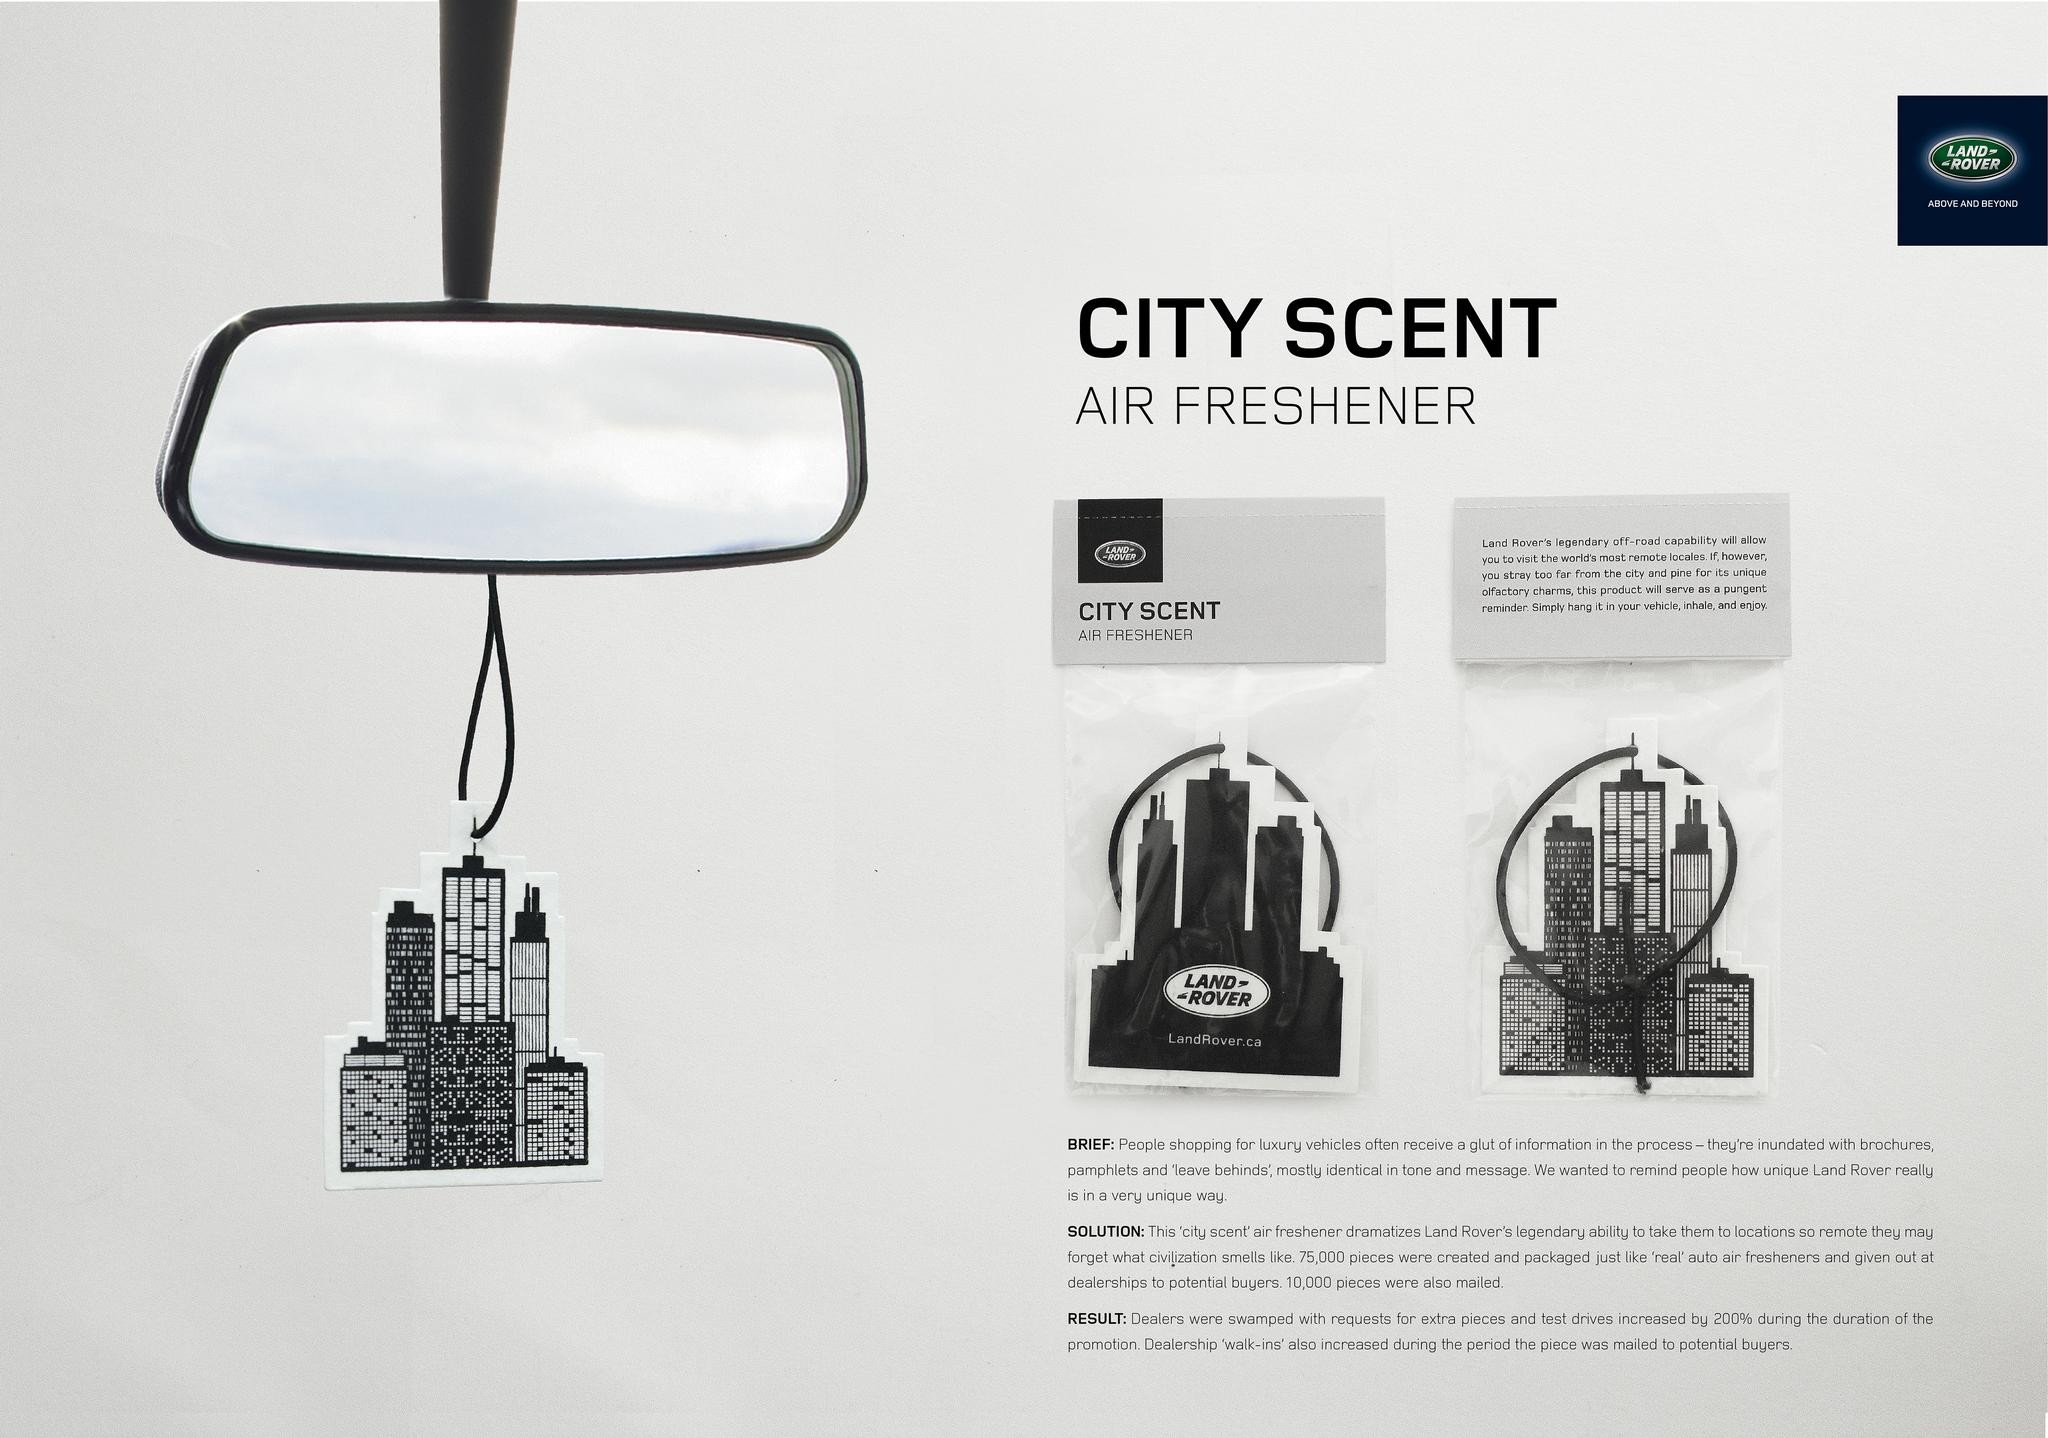 'CITY SCENT' AIR FRESHENER